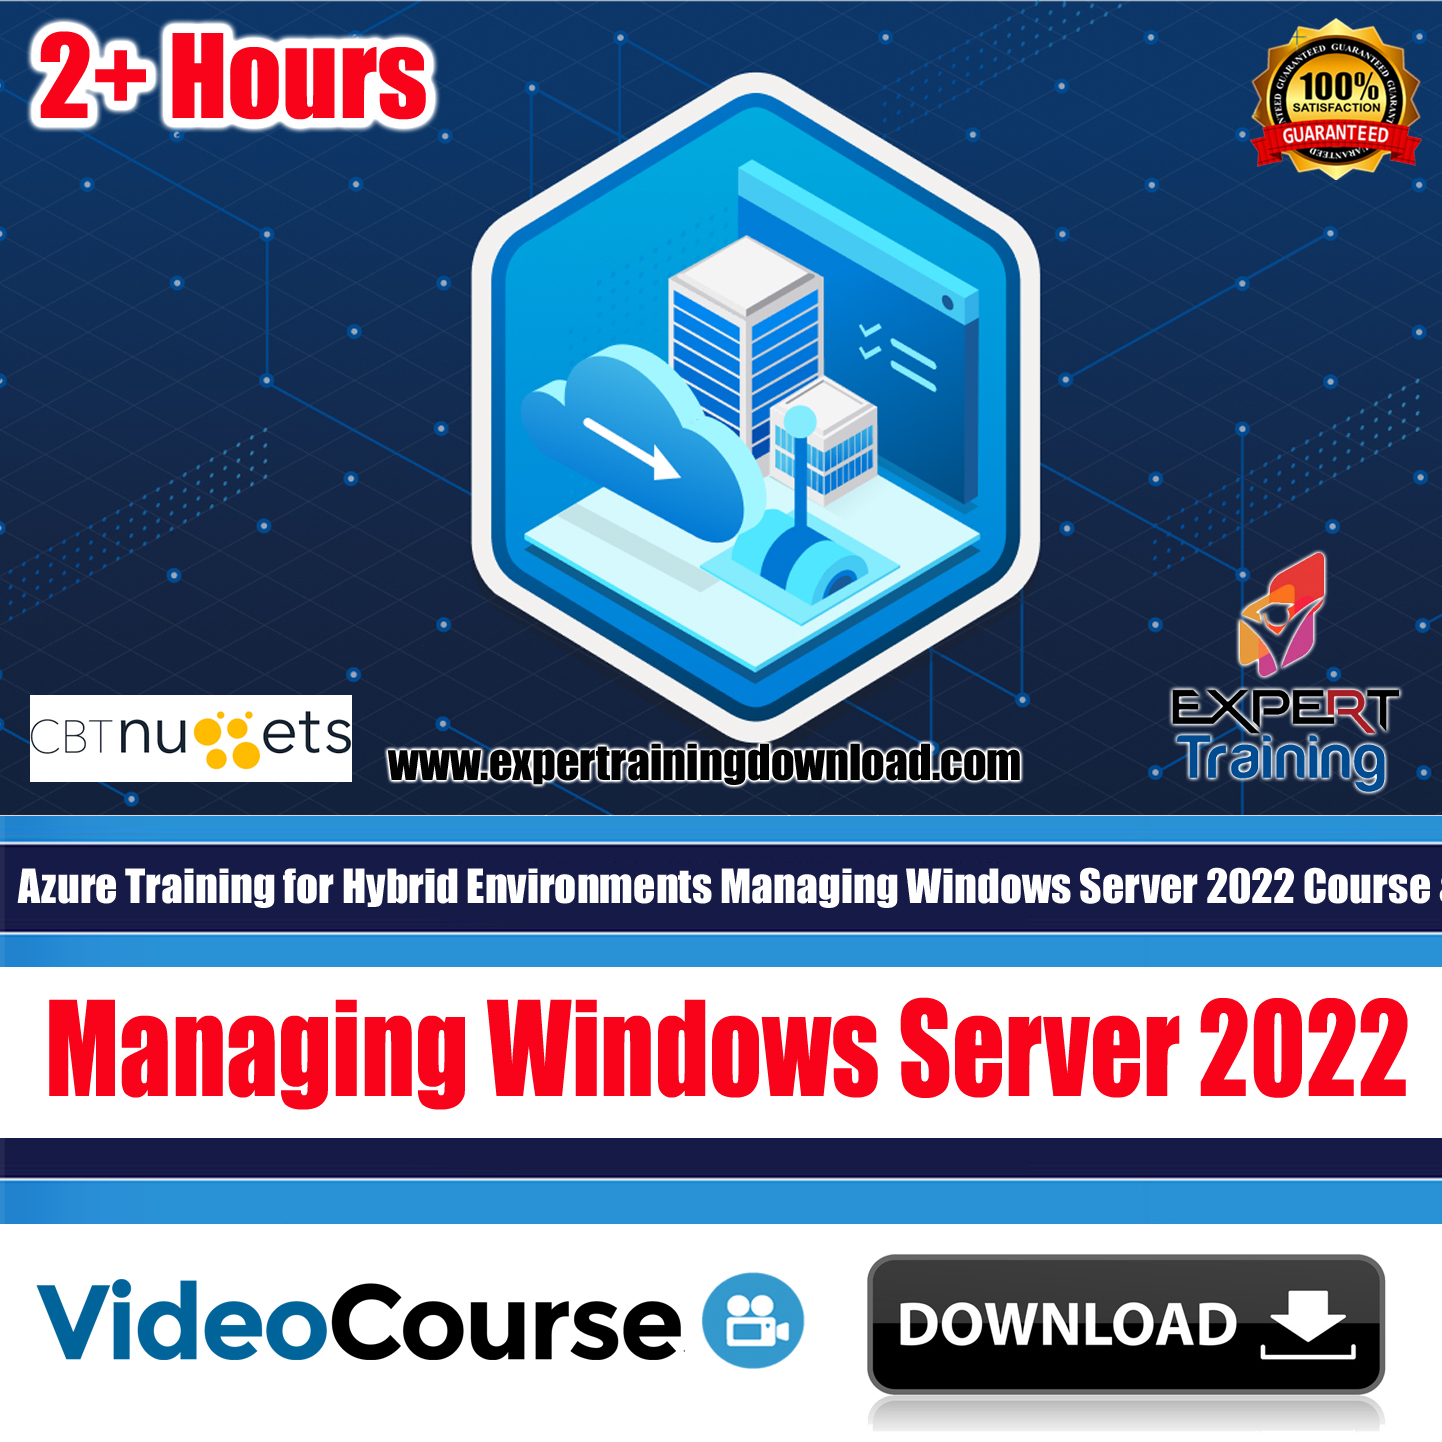 Azure Hybrid Environments Managing Windows Server 2022 